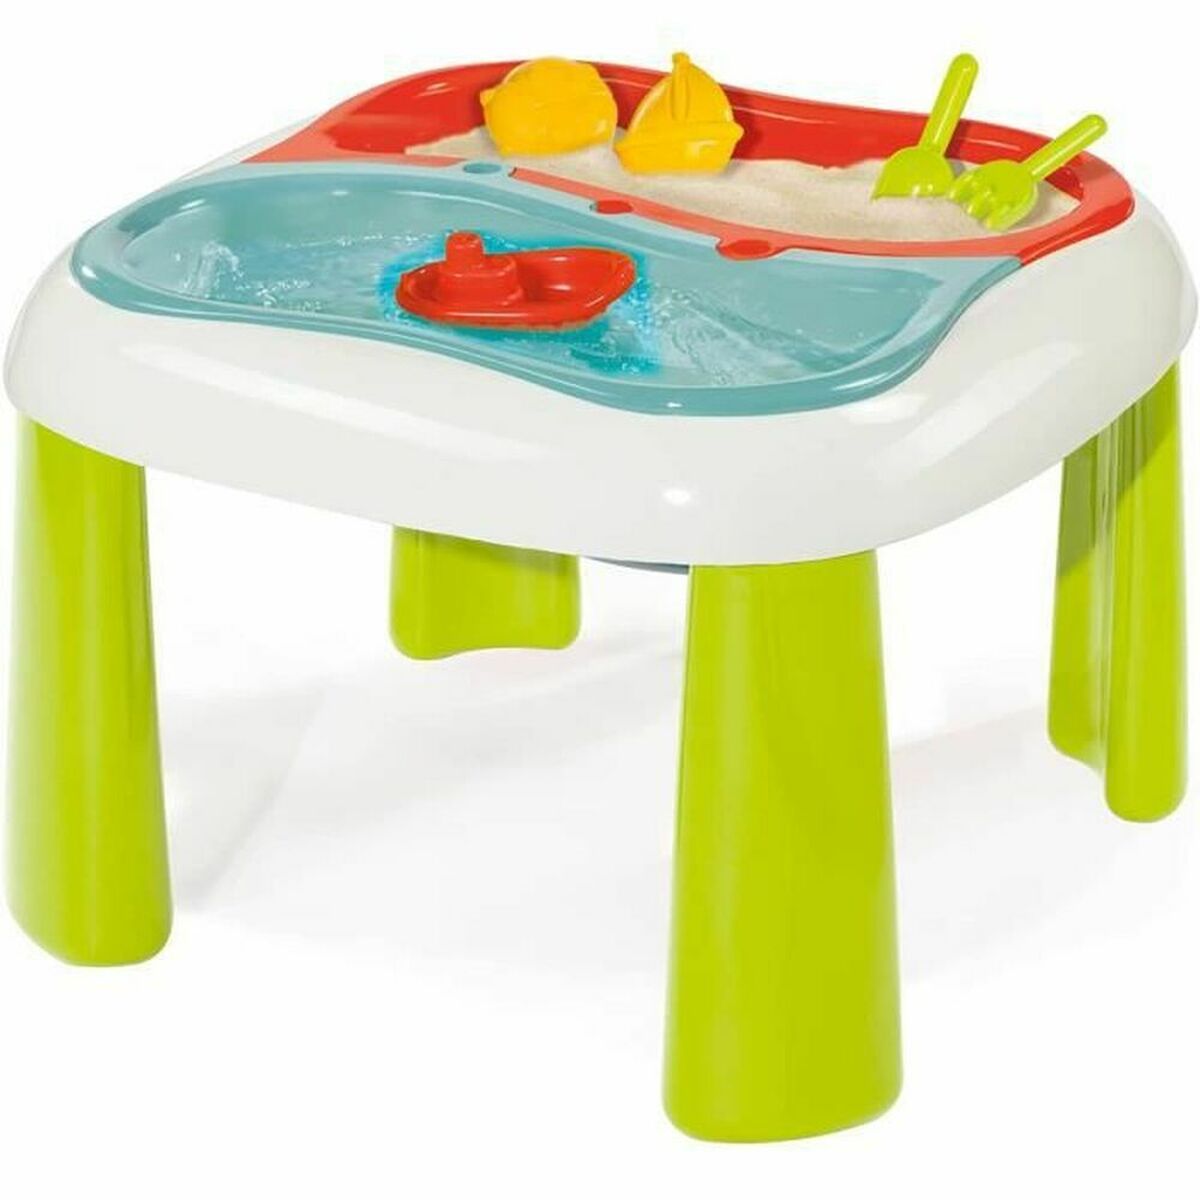 Kindertafel Smoby Sand & water playtable